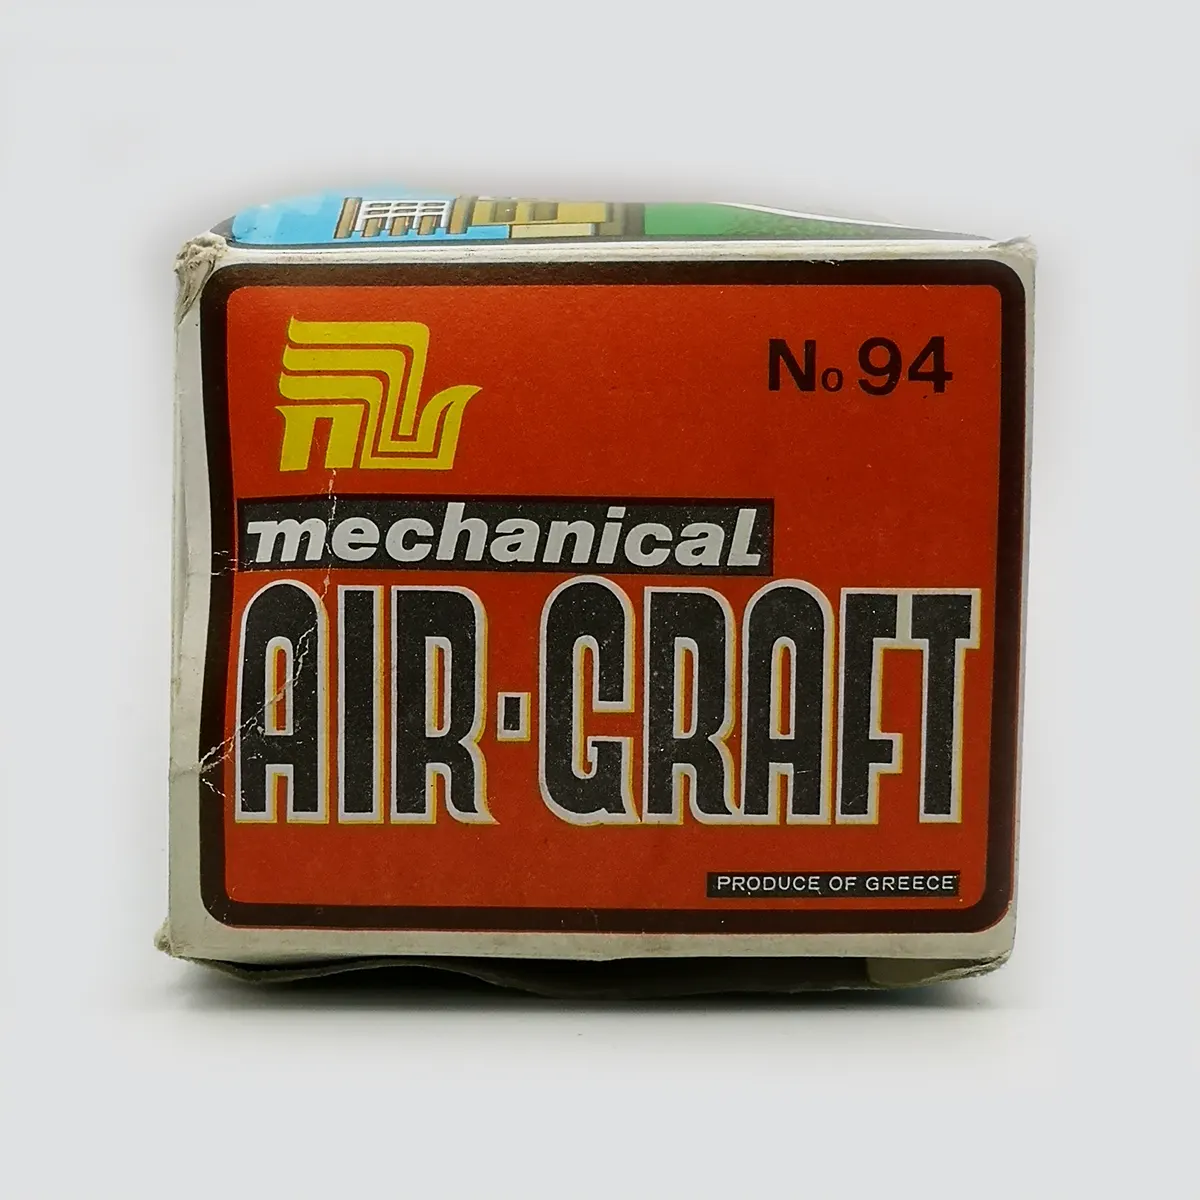 Rare Mechanical Airctaft Made in Greece 3